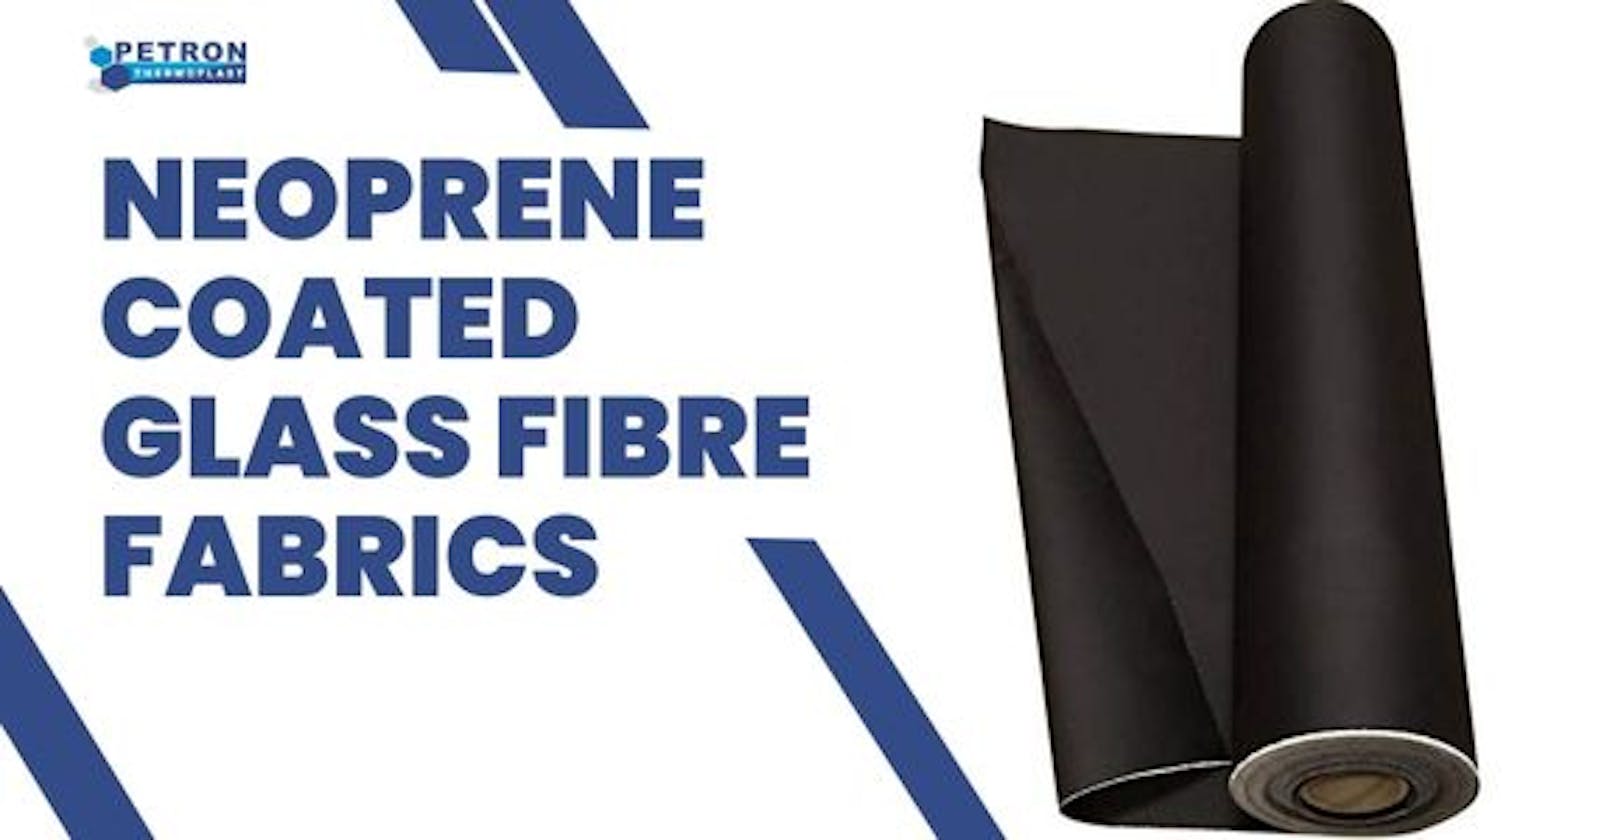 What are Neoprene Coated Glass Fibre Fabrics?